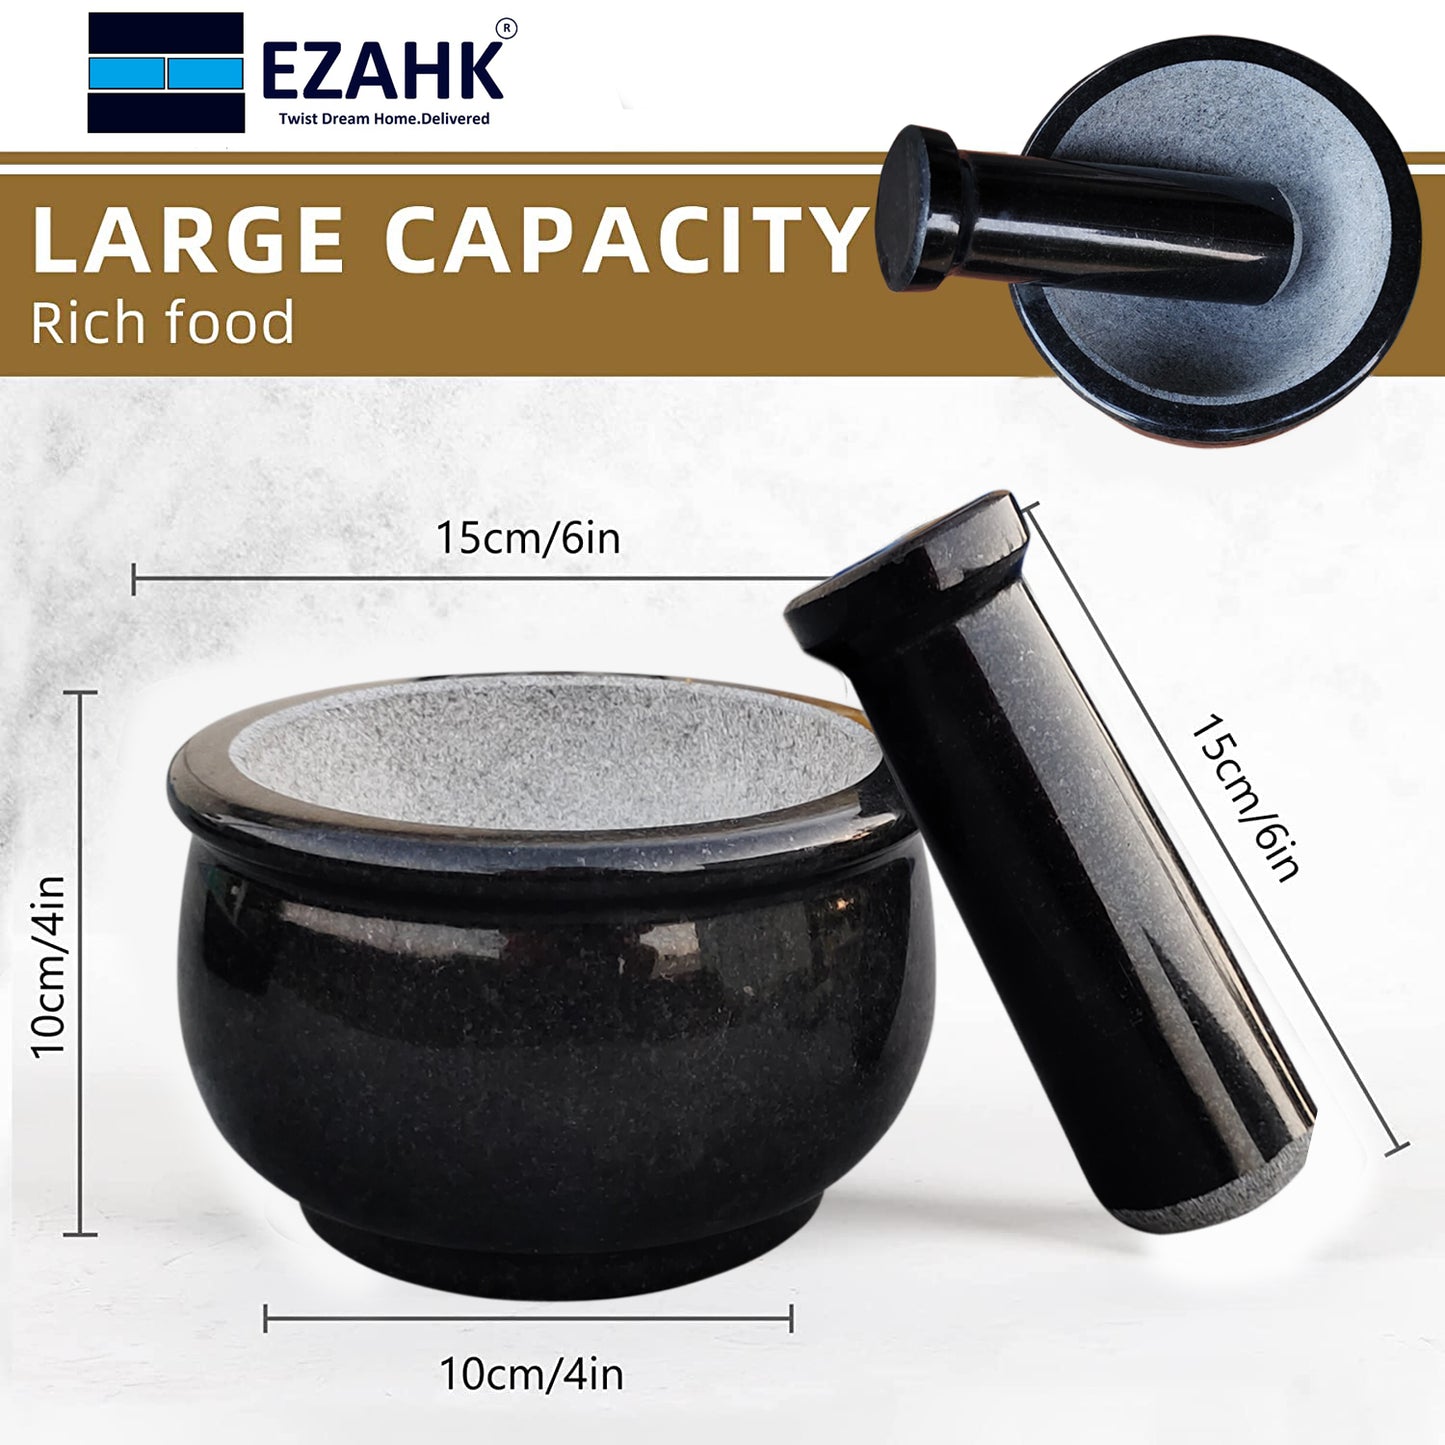 EZAHK Pure Granite Stone and Mortar and Pestle Set 6 inch Big Size